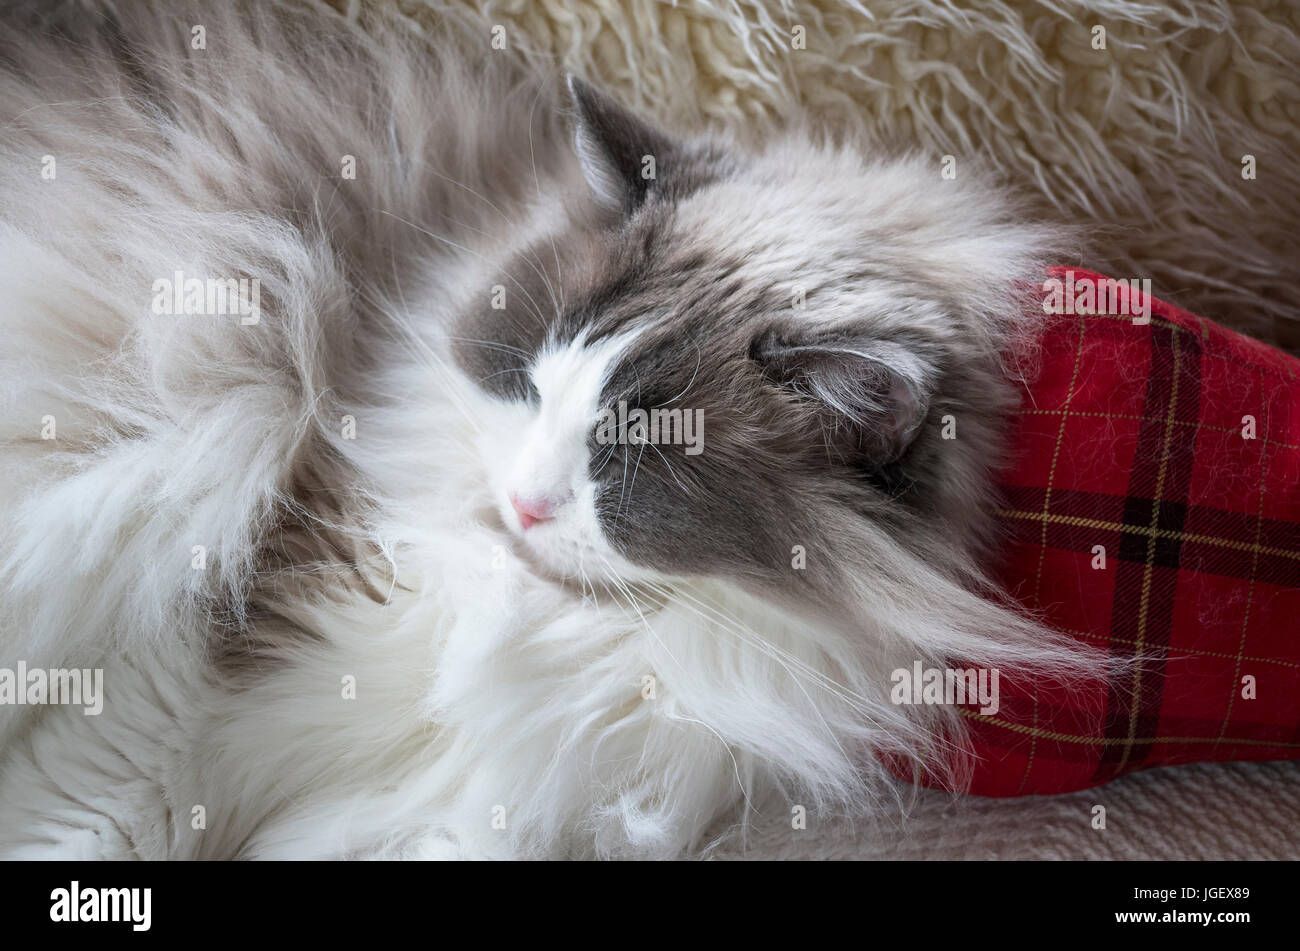 A sleeping adult Ragdoll cat indoors Stock Photo